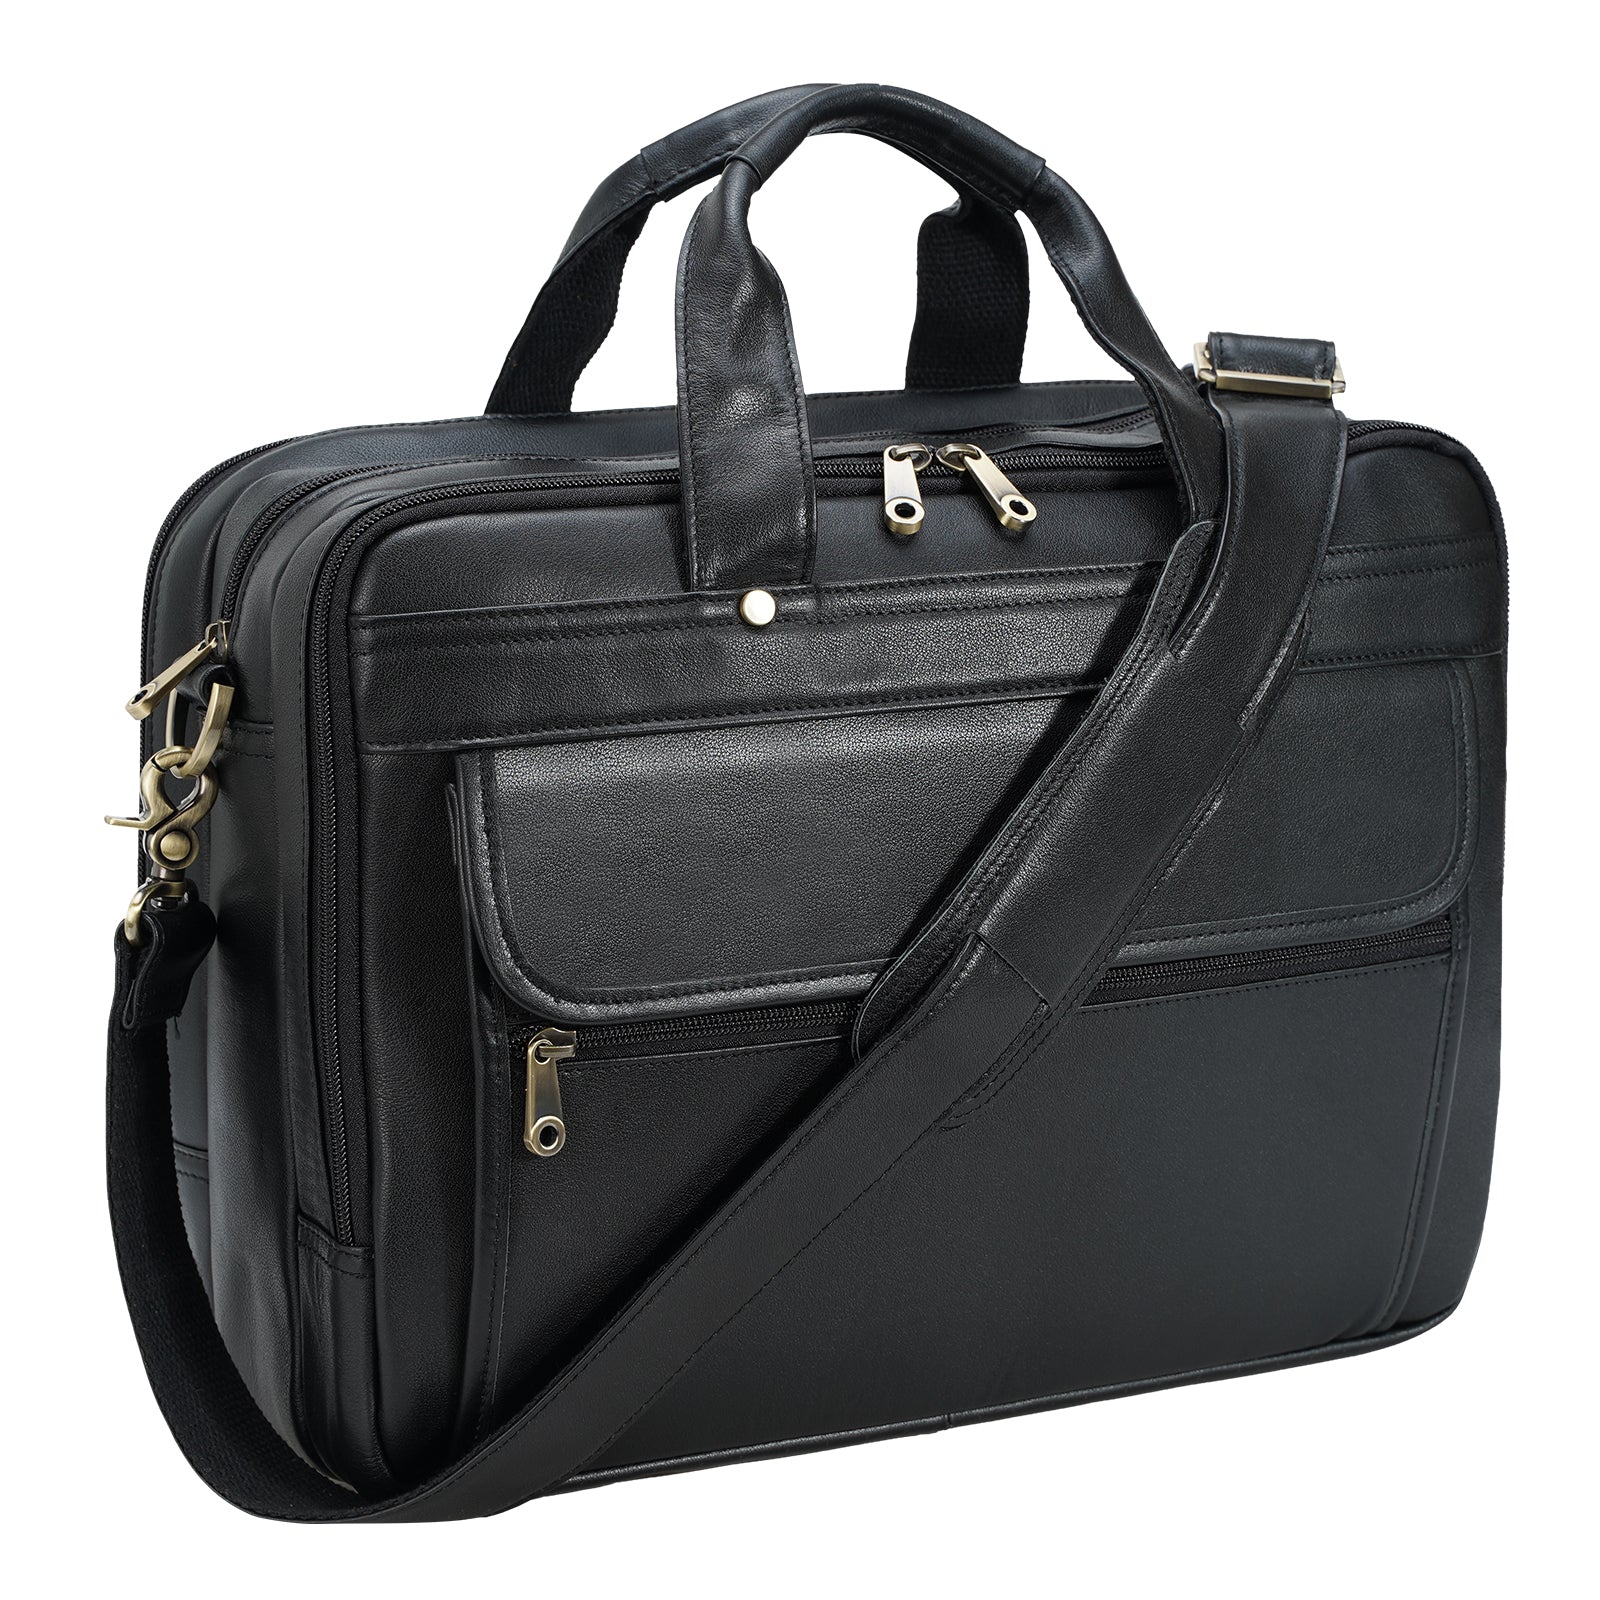 Briefcase | Buy Men's Briefcase Online Australia- THE ICONIC